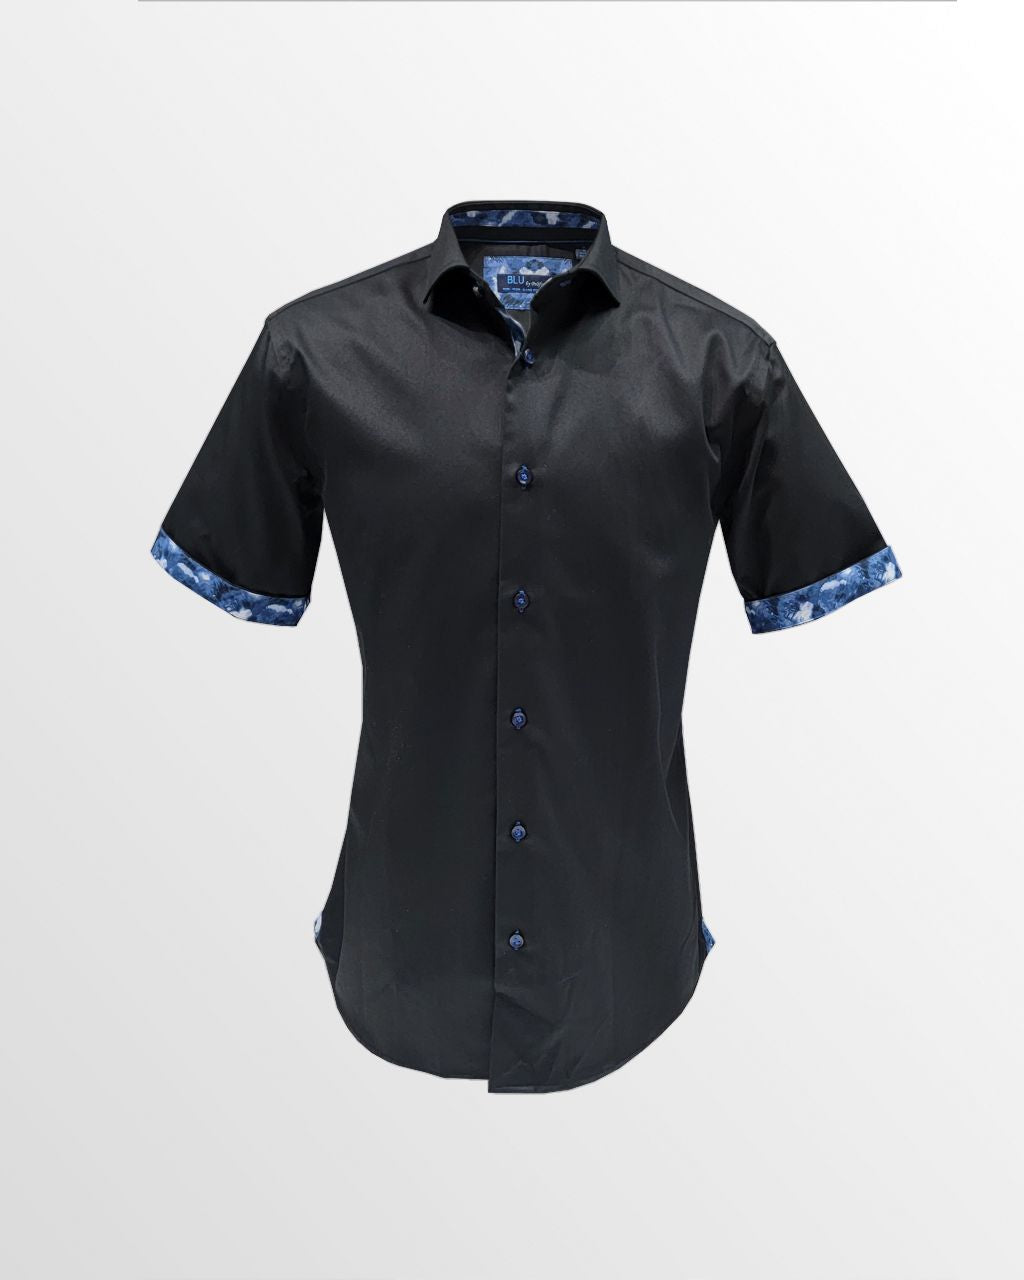 Polifroni Blu Short Sleeve Sport Shirt Black with Floral Contrast